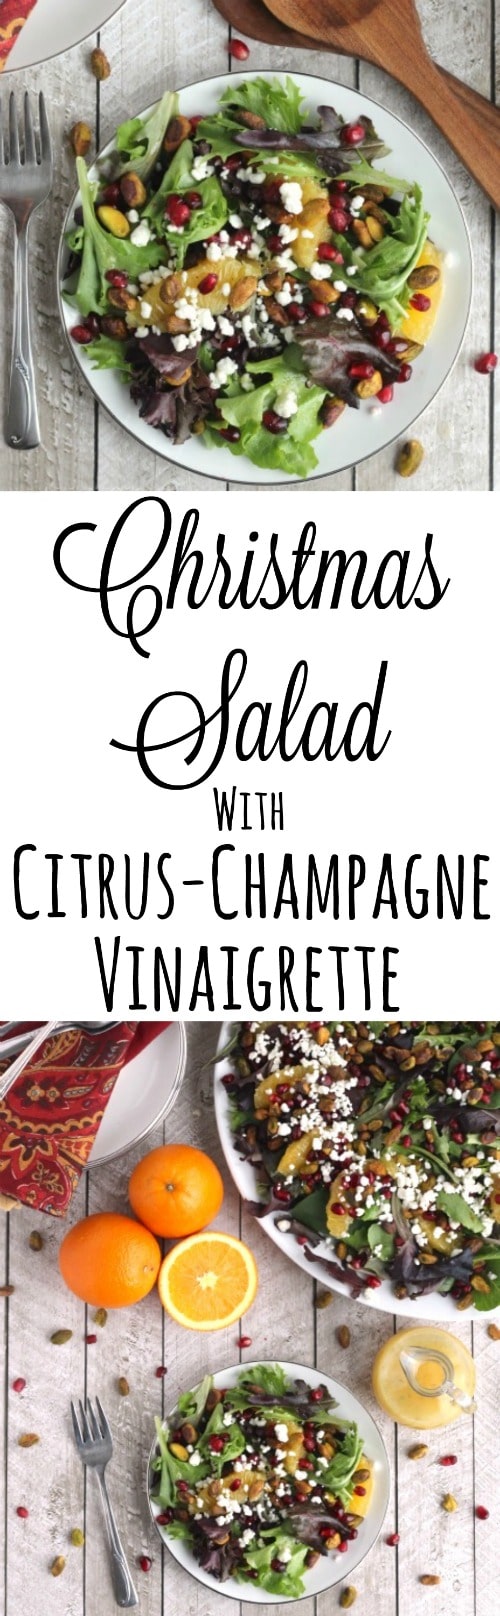 Christmas Salad with Citrus-Champagne Vinaigrette Recipe {www.TwoHealthyKitchens.com}